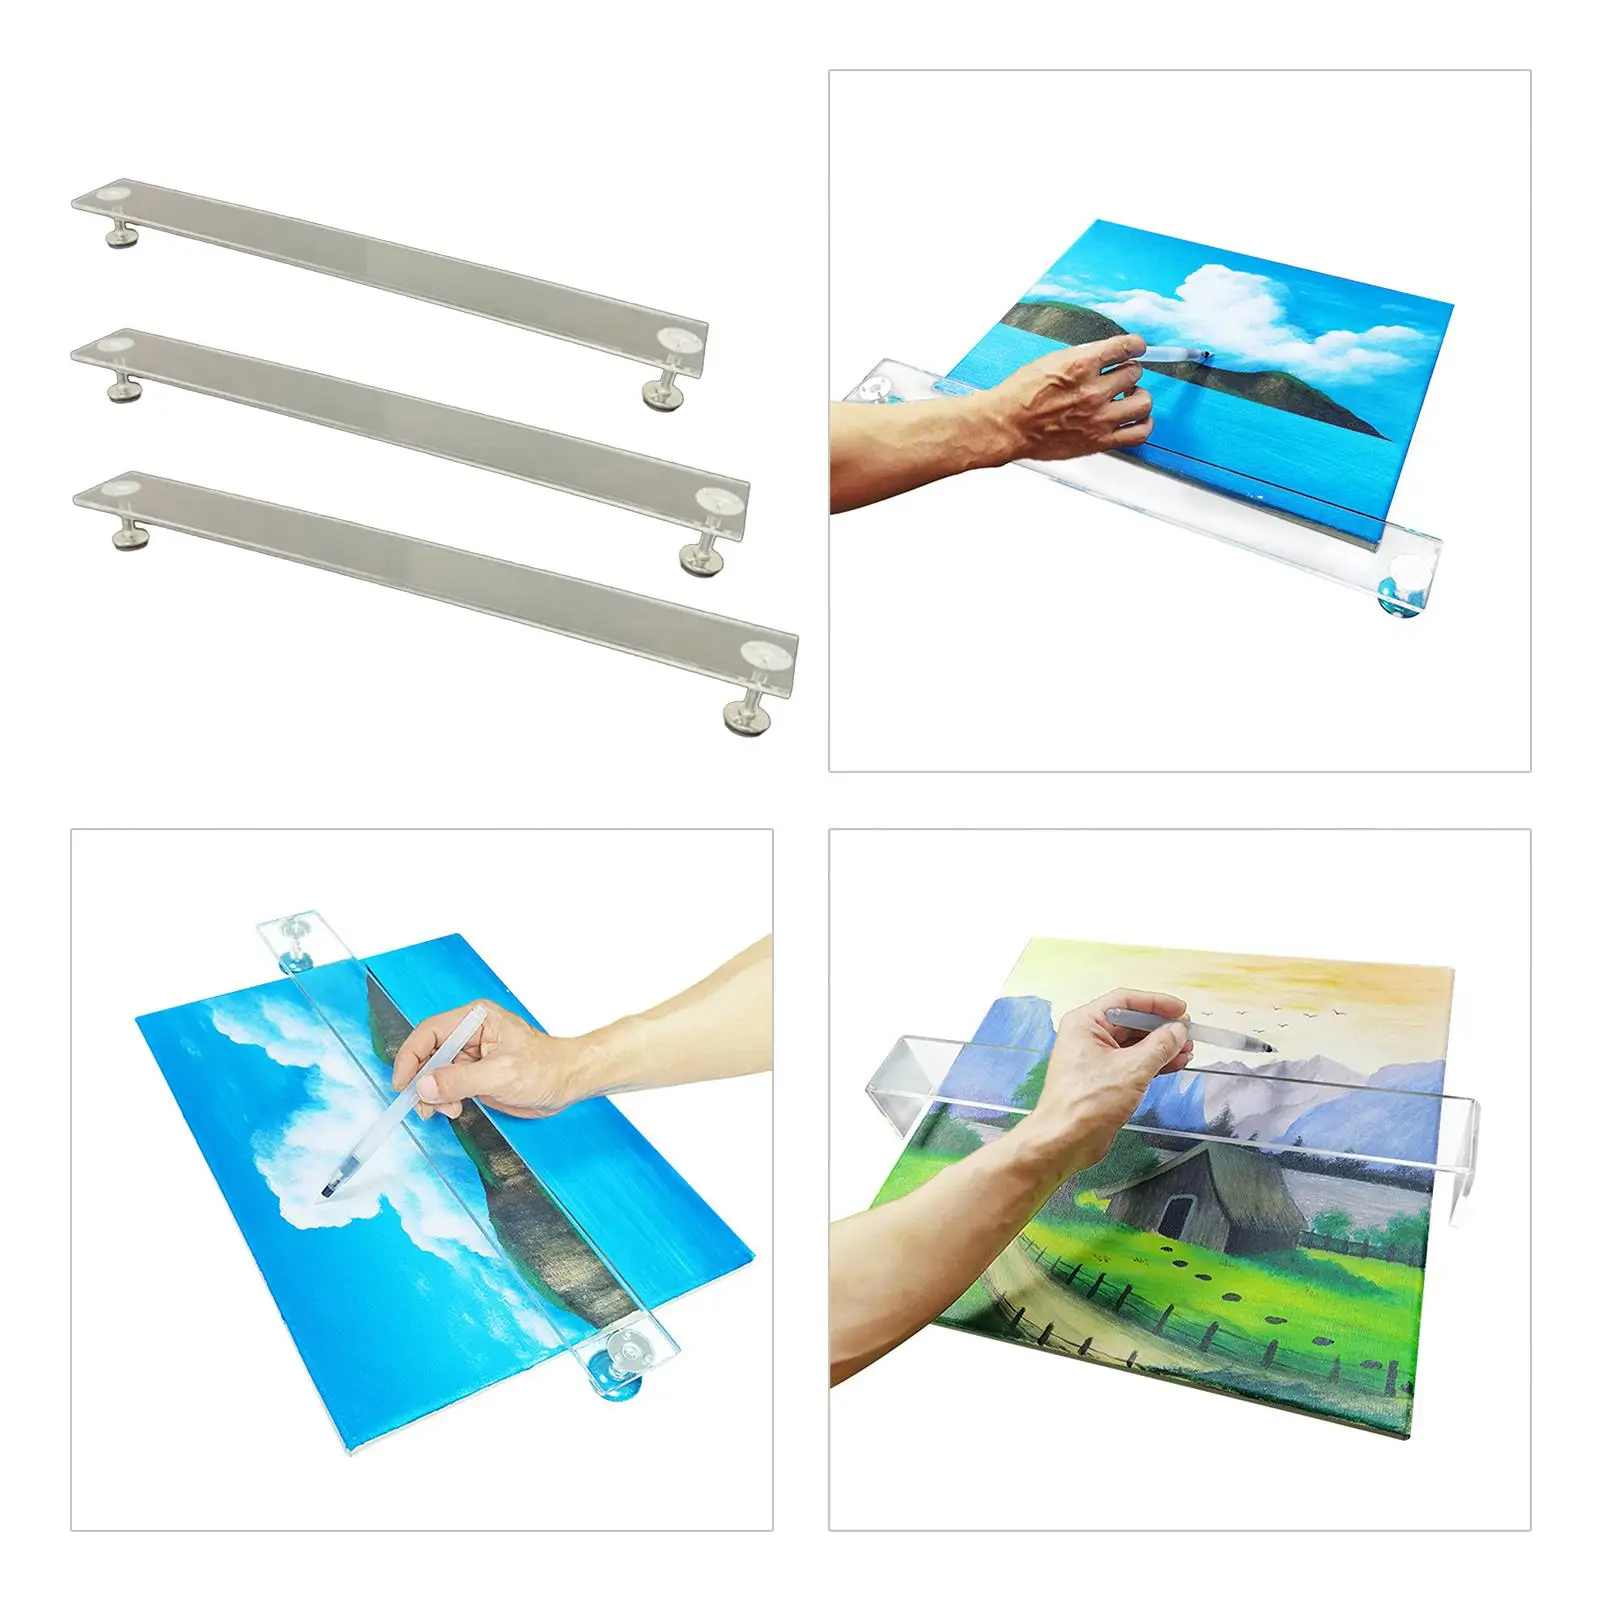 Artist Leaning Bridge Acrylic Rack Sturdy for Home Studio Drawing Palm Rest Shelf Wrist Protection Height Adjustable Artist Tool